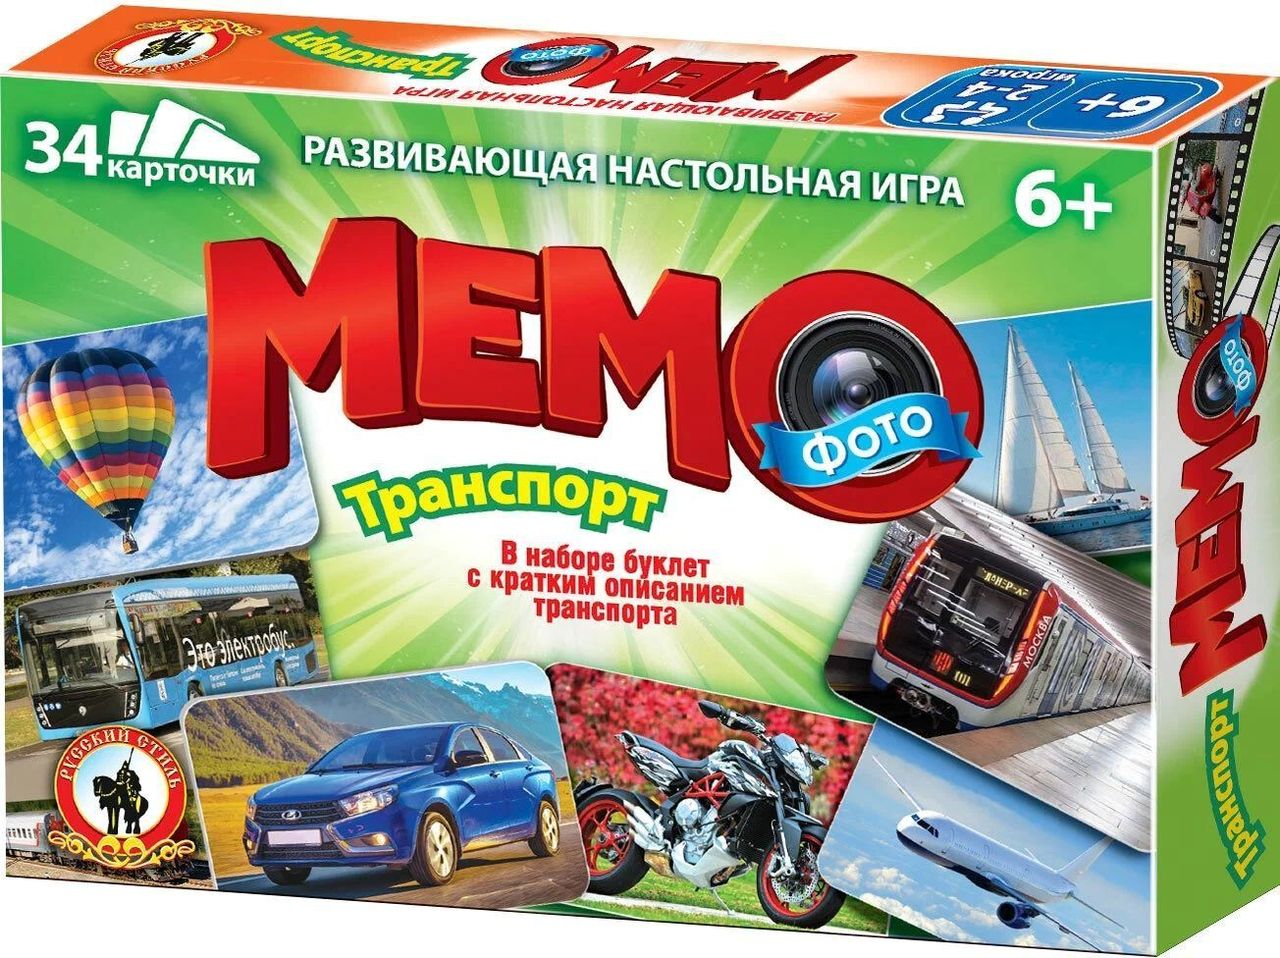 Мемо - фото "Транспорт" (34карточки) 6+ \ 04610 Русский стиль